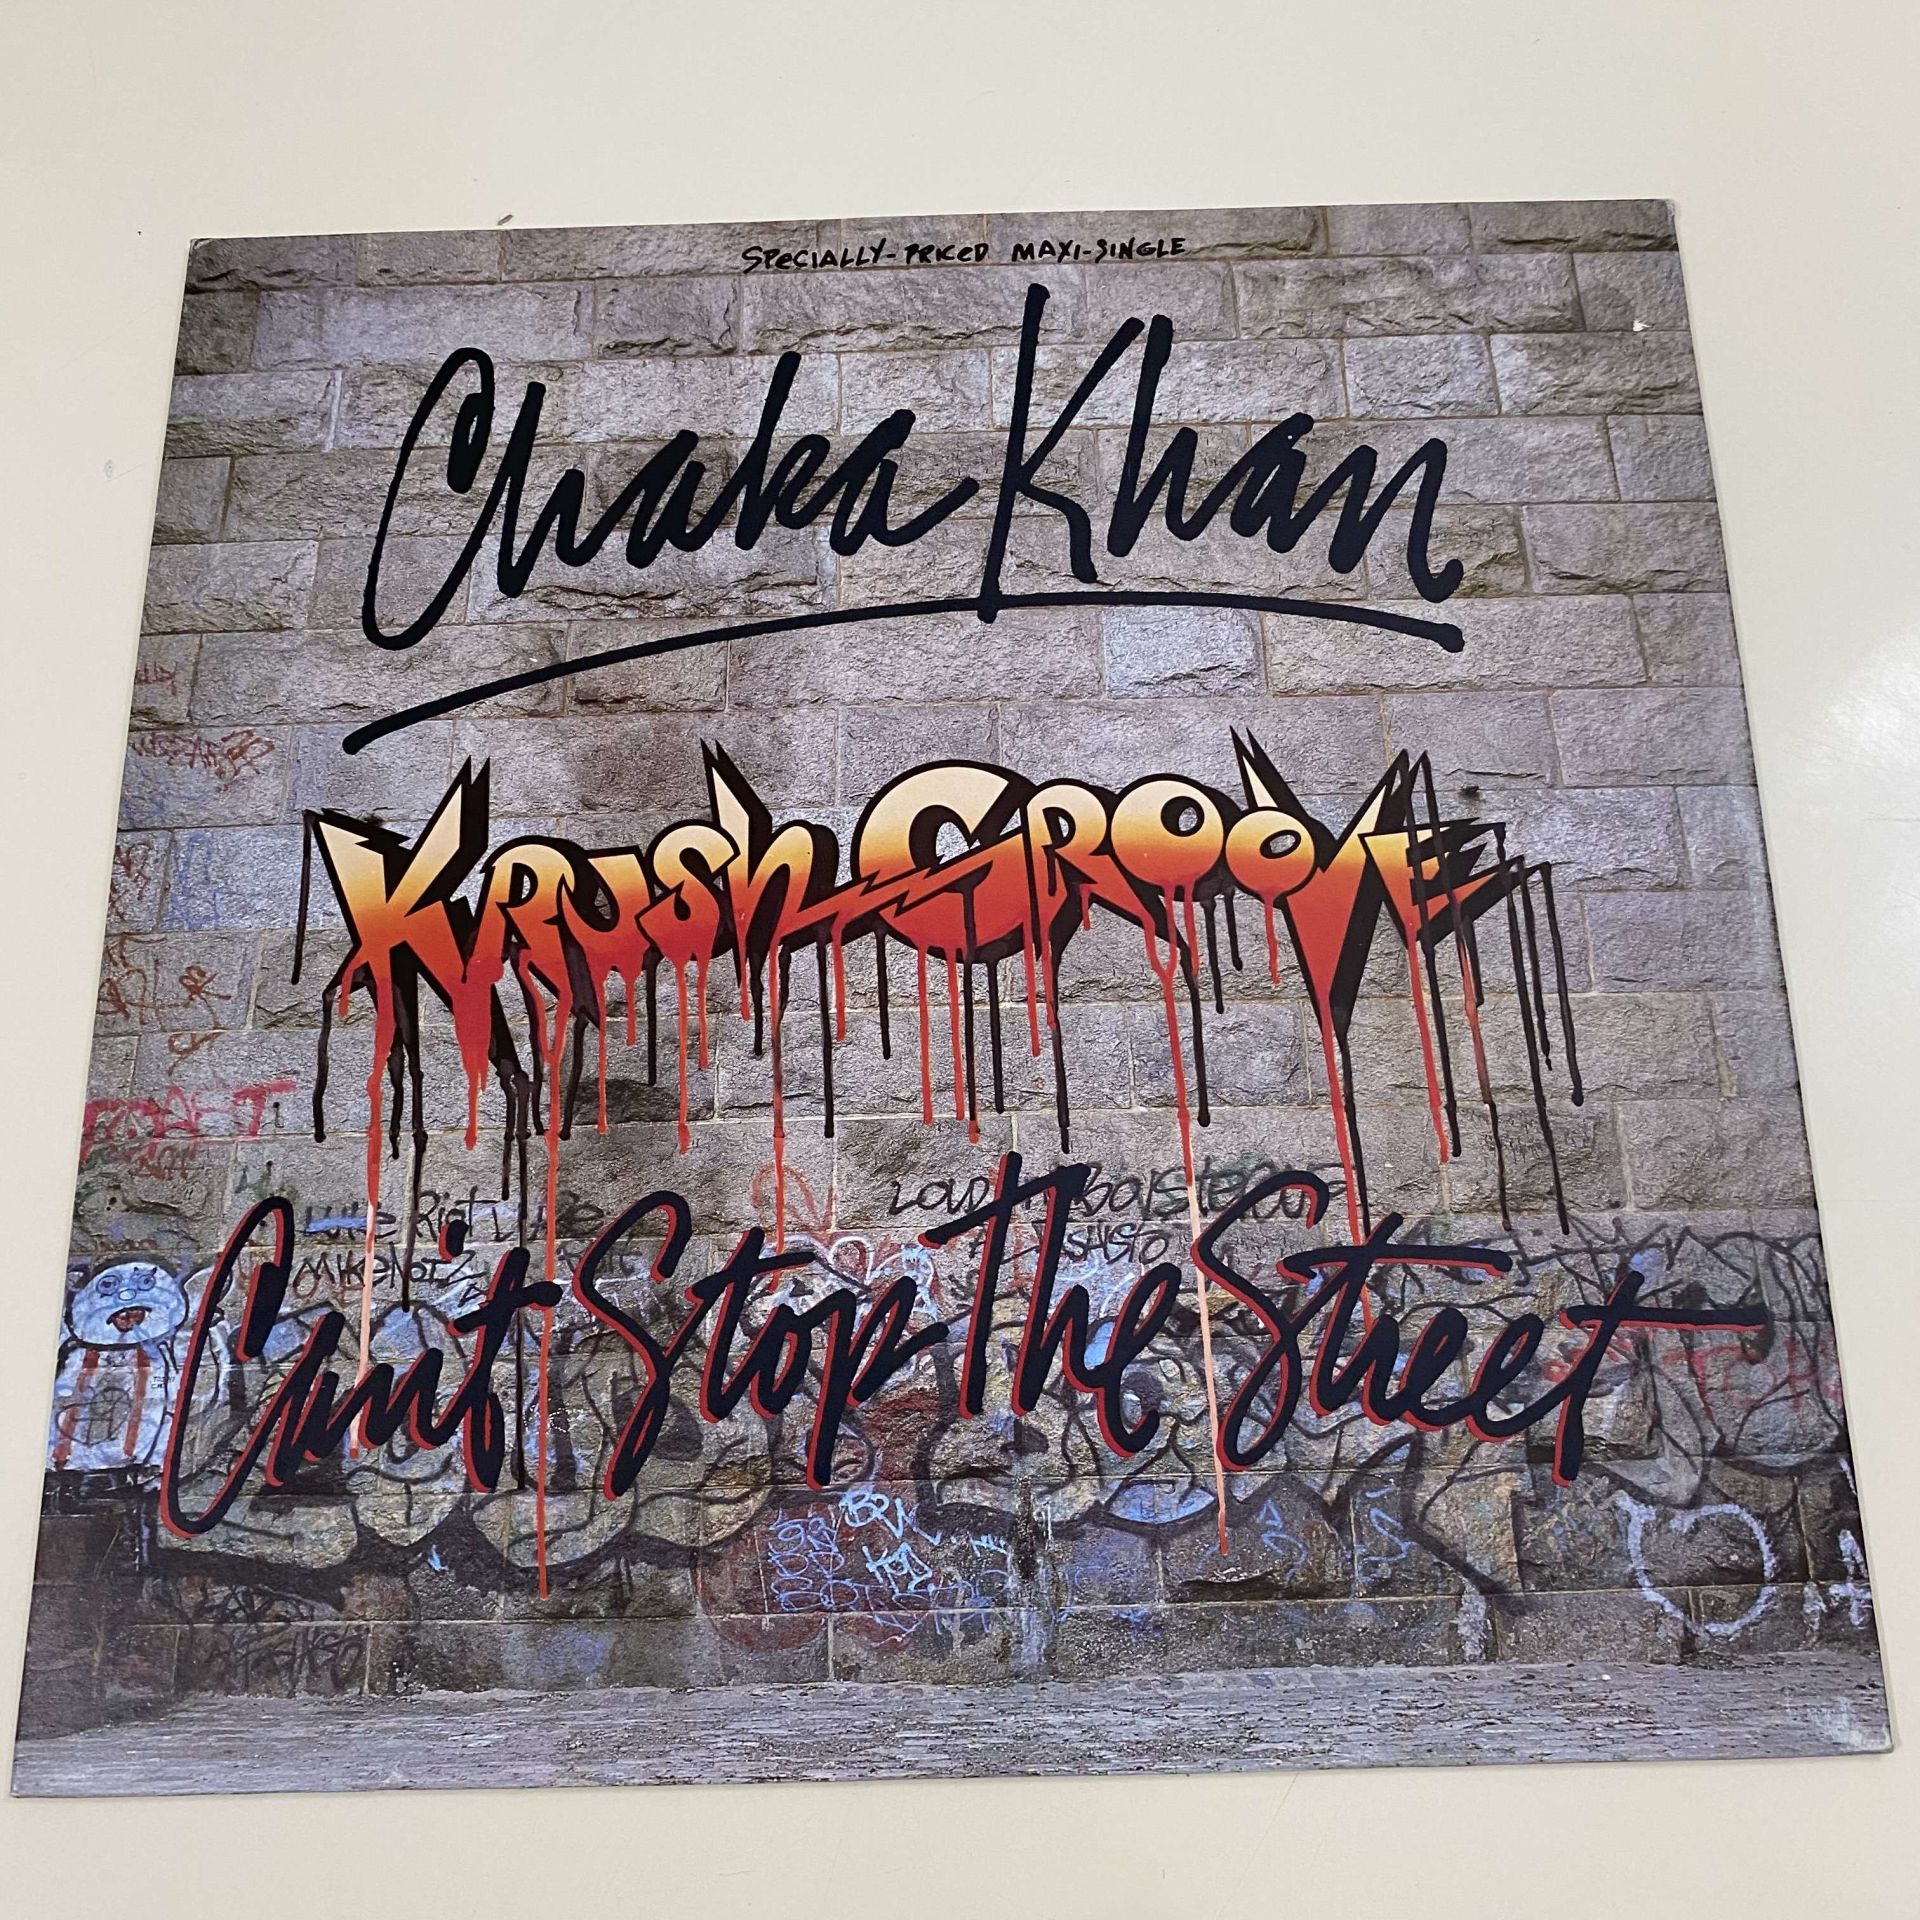 Chaka Khan – (Krush Groove) Can't Stop The Street